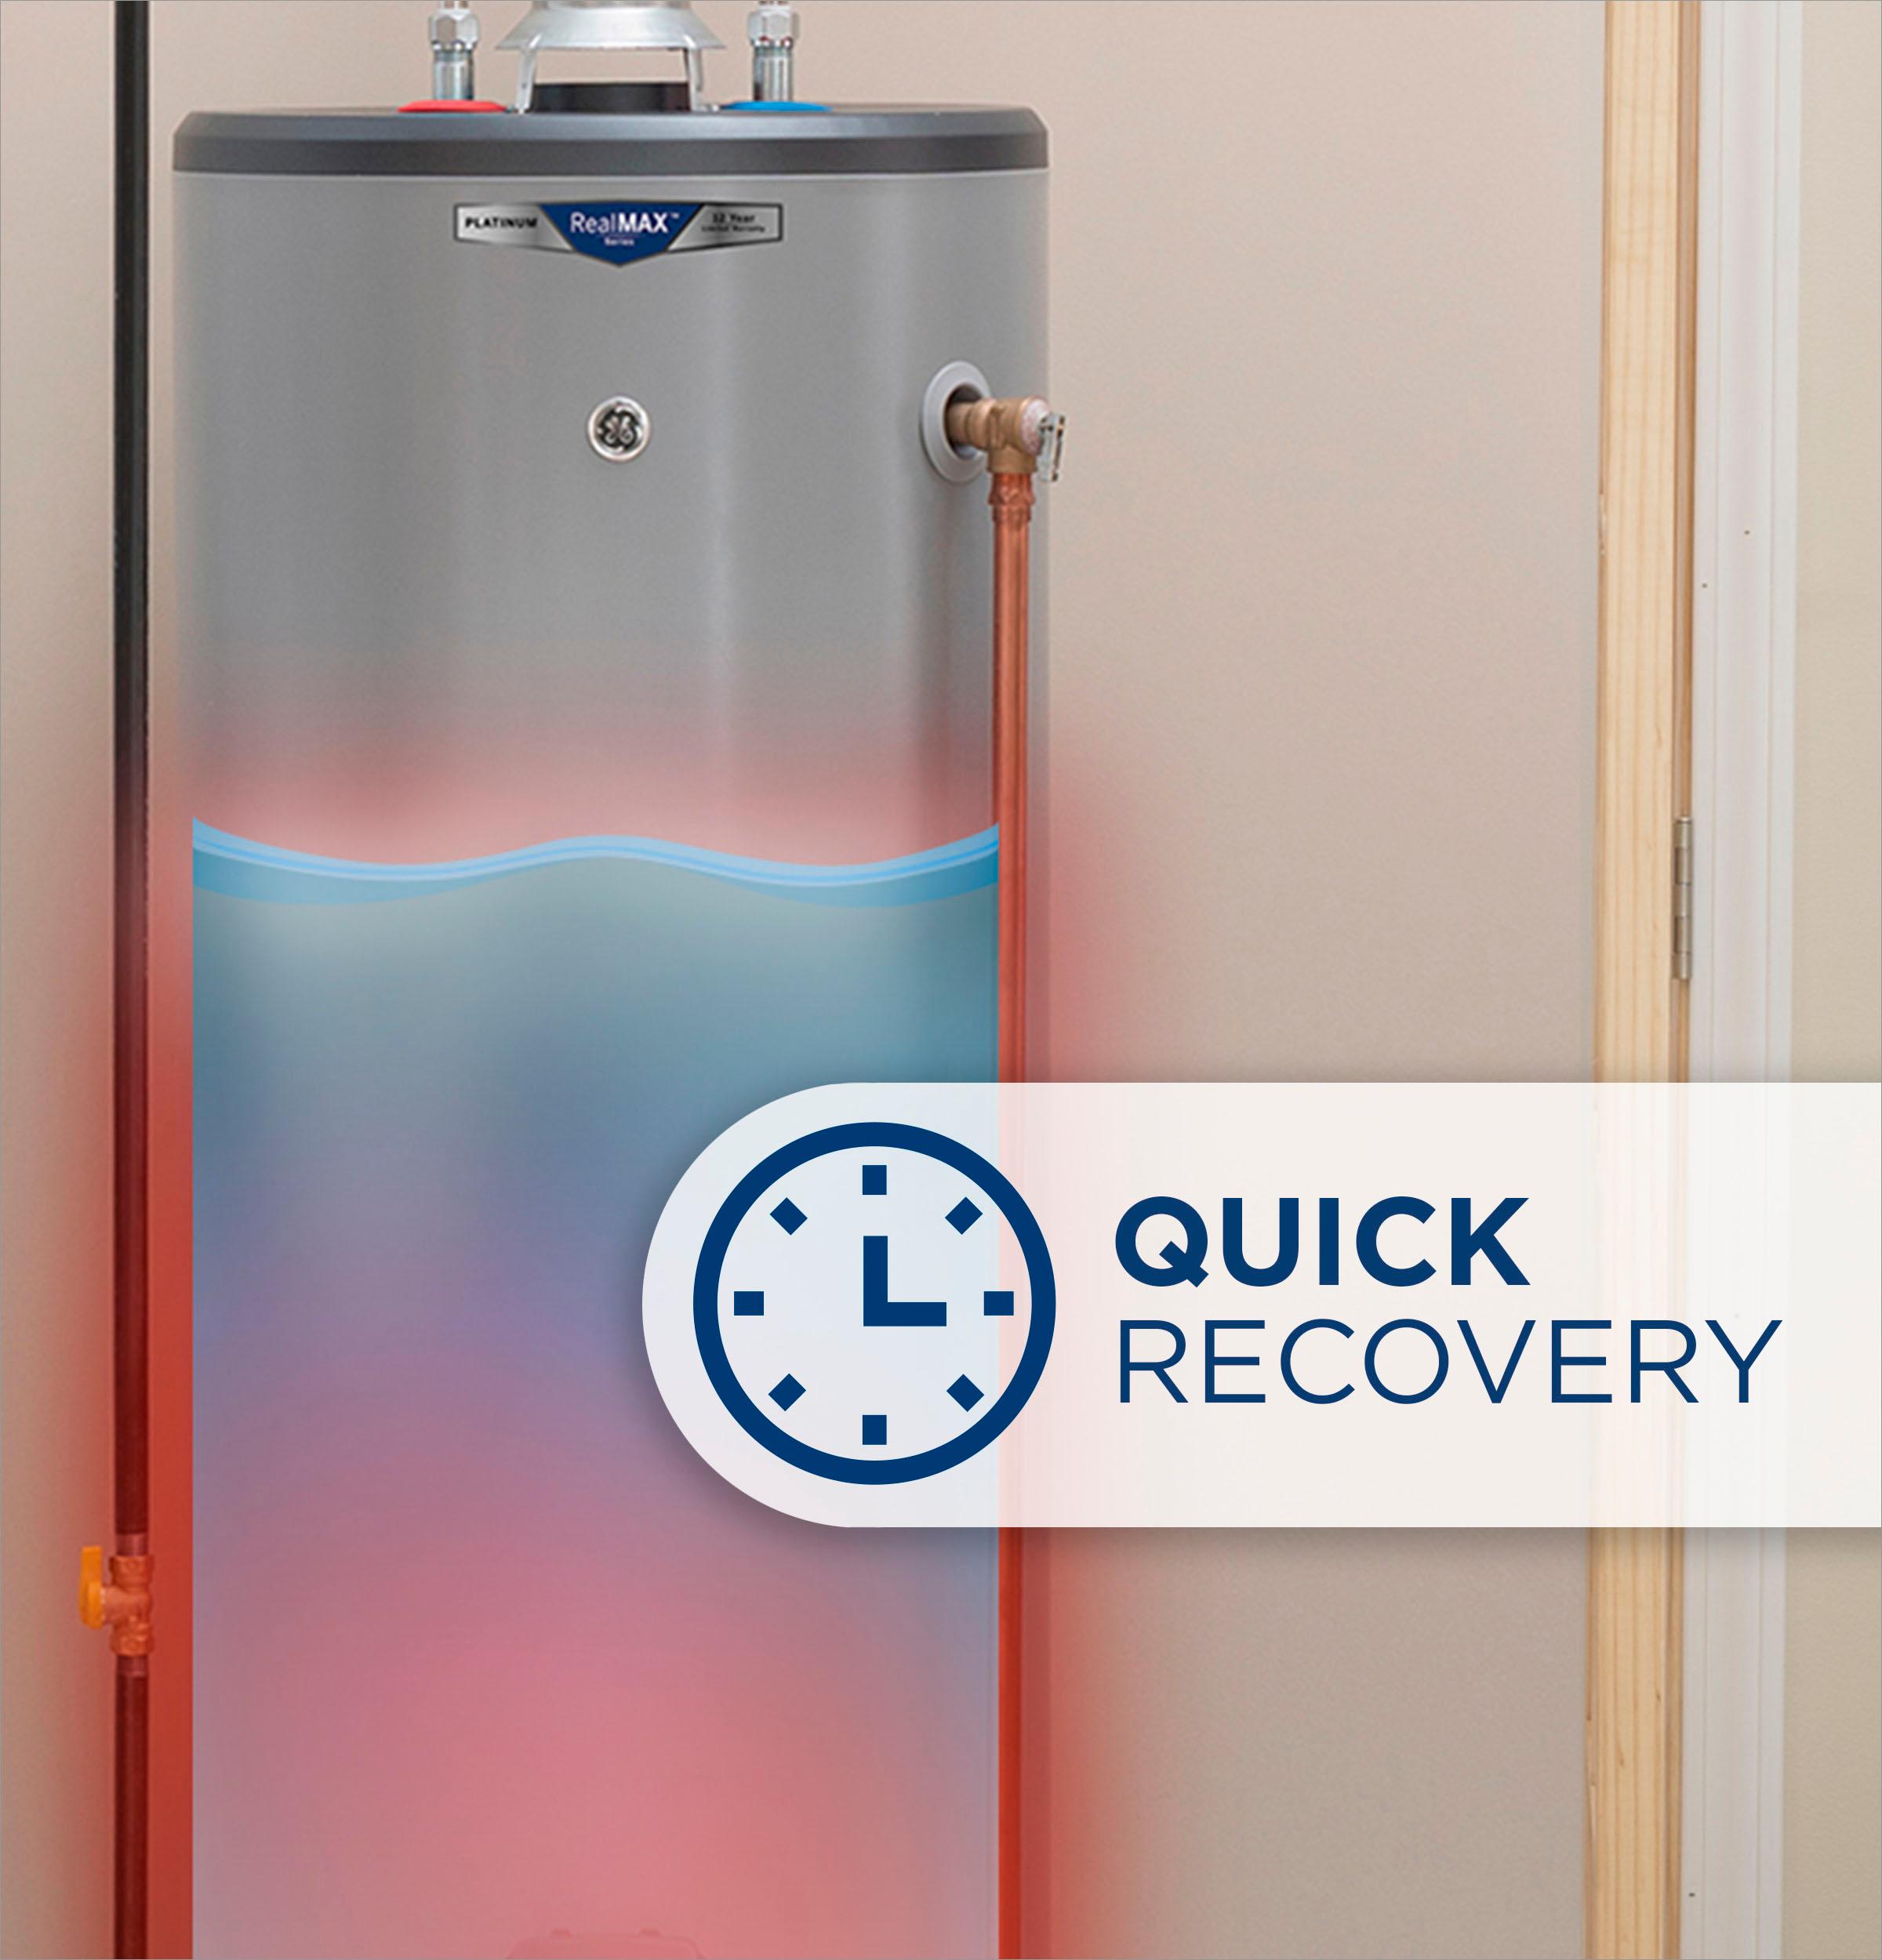 GE RealMAX Choice 40-Gallon Tall Liquid Propane Atmospheric Water Heater